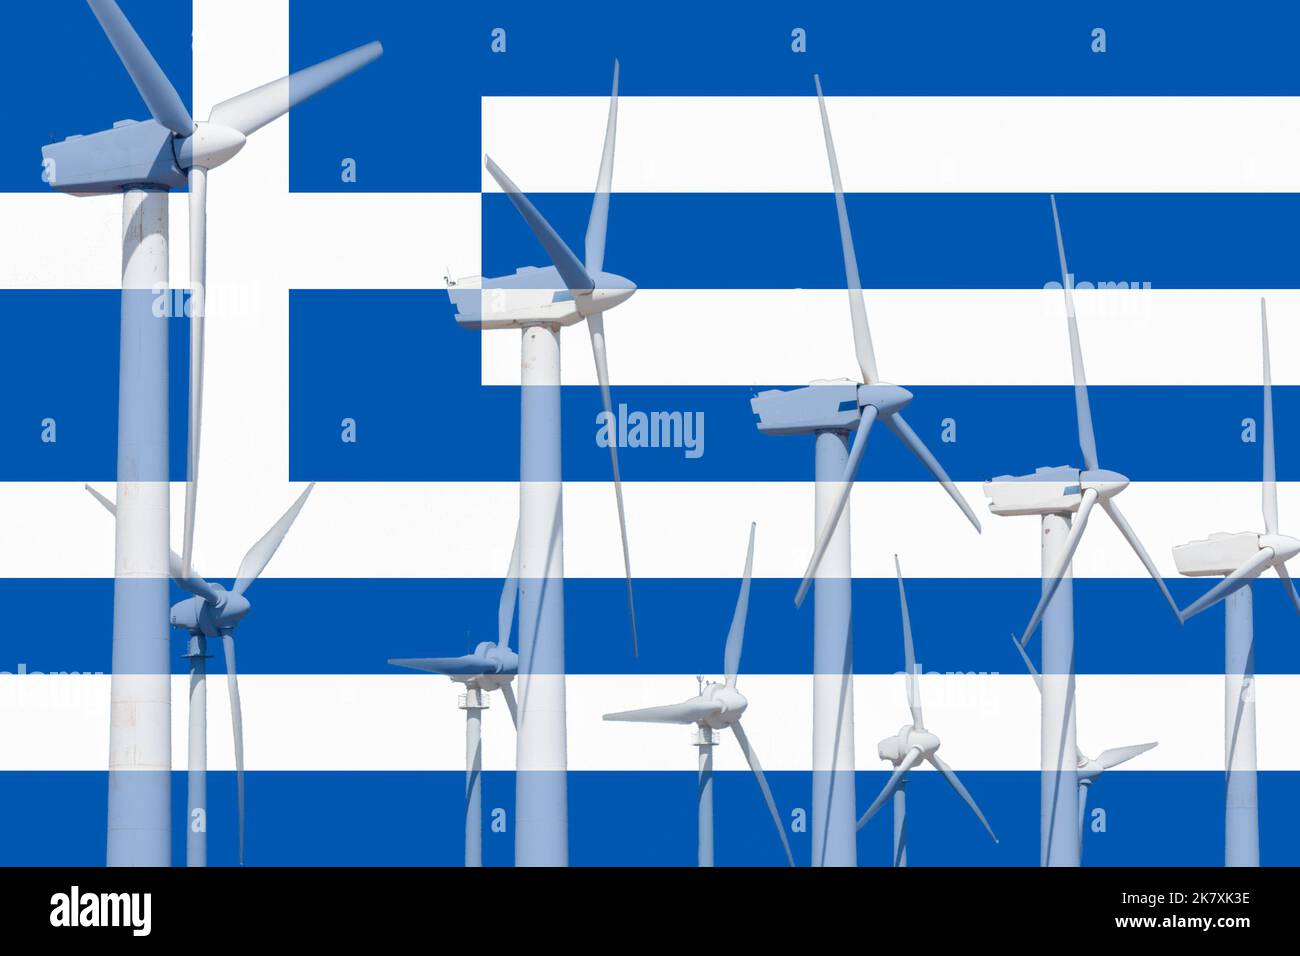 Wind turbines on flag of Greece. Stock Photo